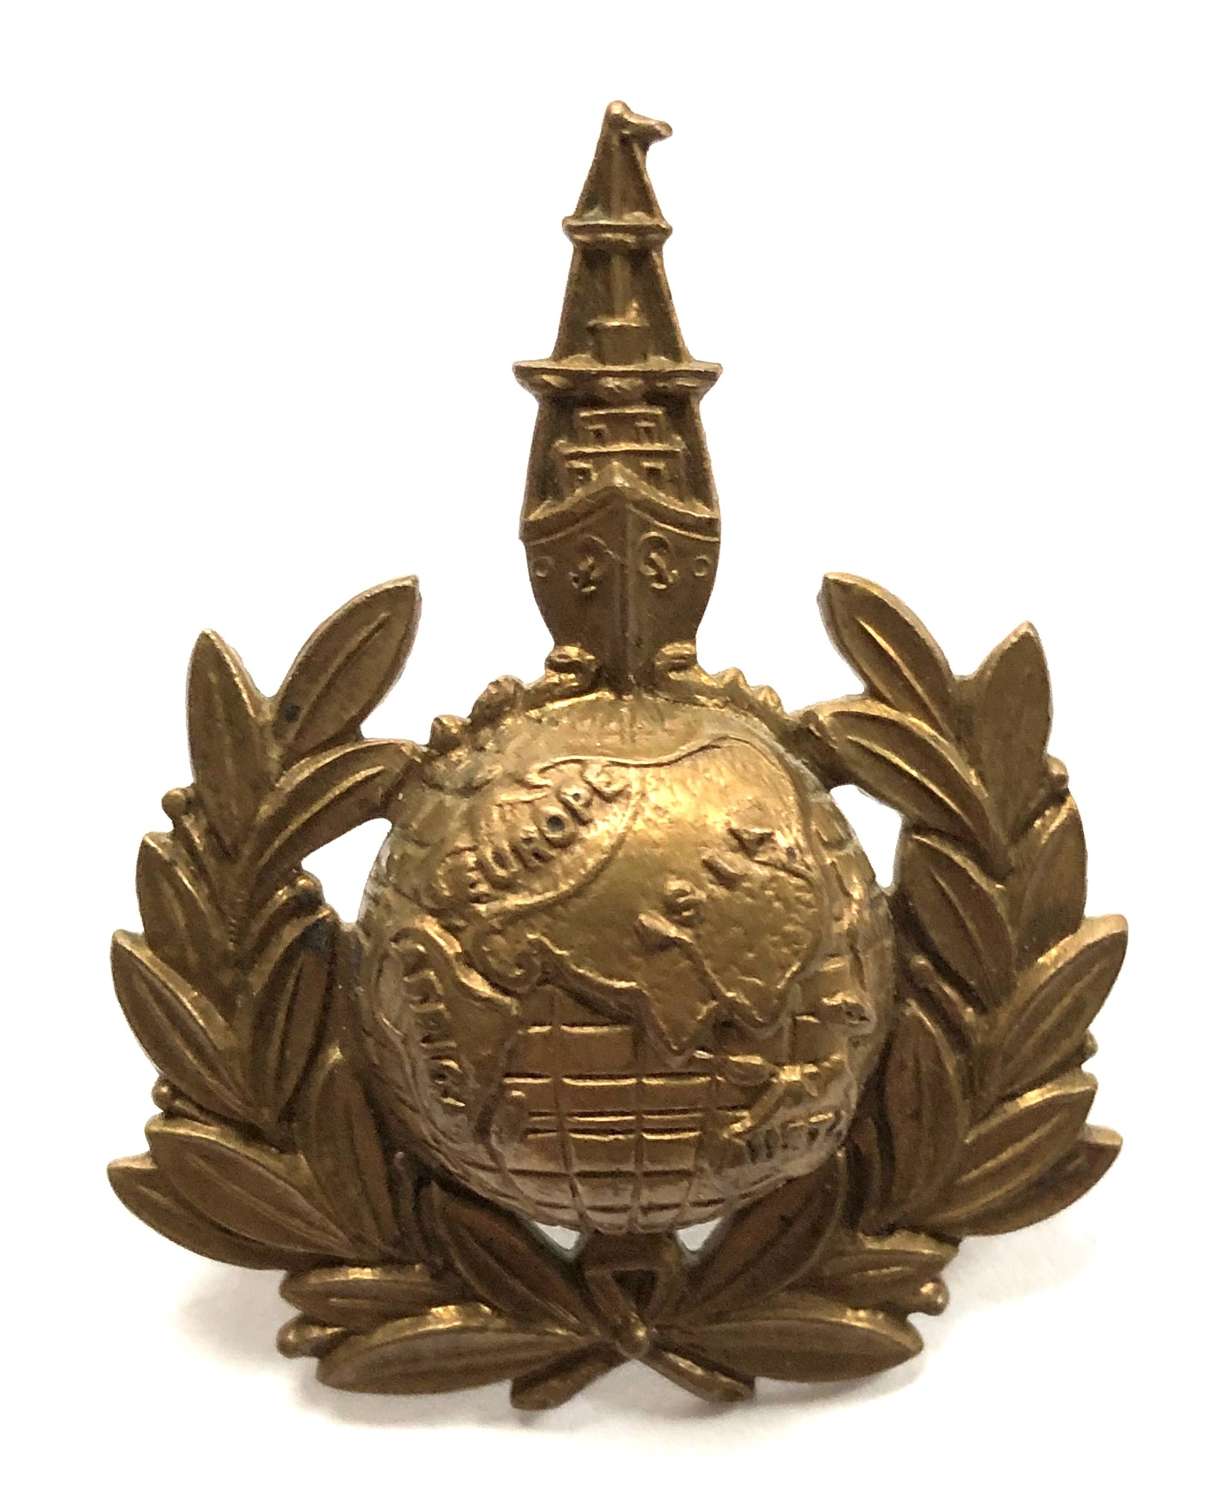 Royal Marines Labour Corps WWI cap badge circa 1917-19.